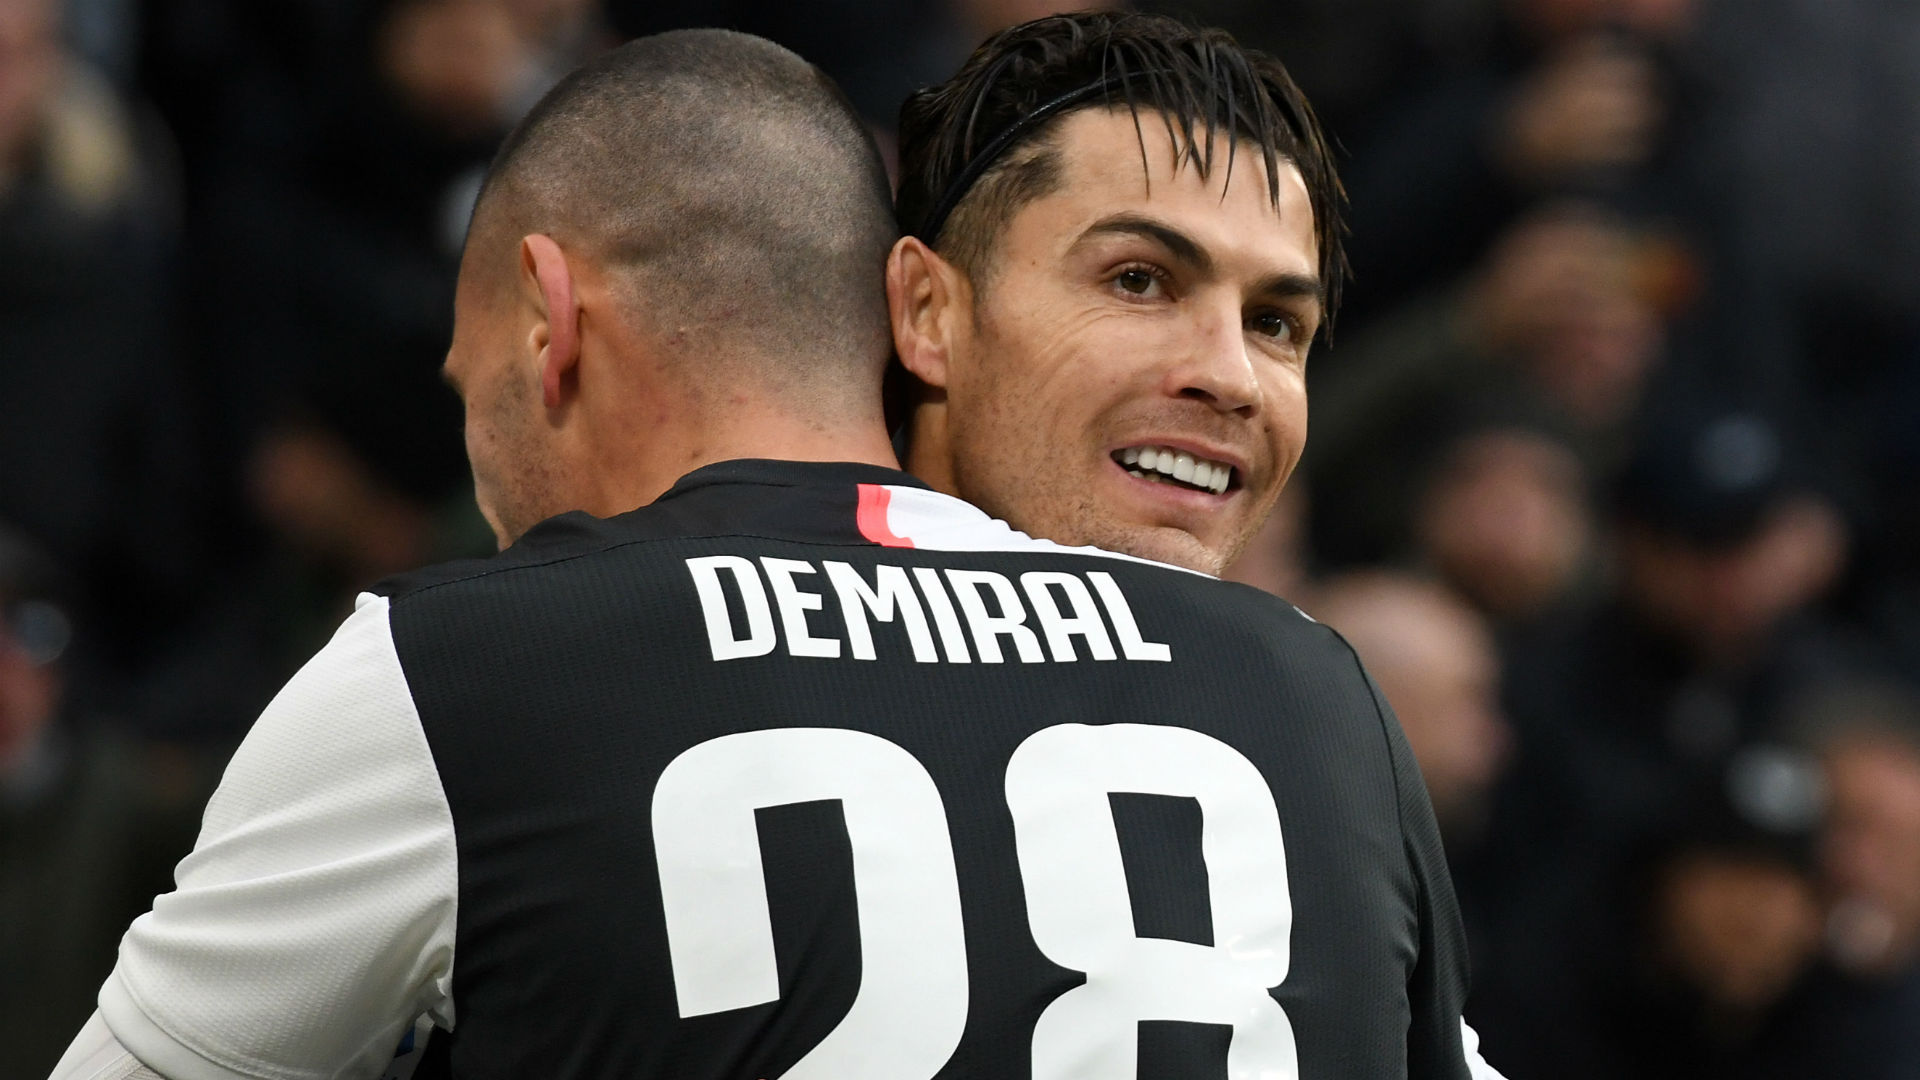 Juventus 3-1 Udinese: Ronaldo stars alongside Dybala and Higuain in comfortable win